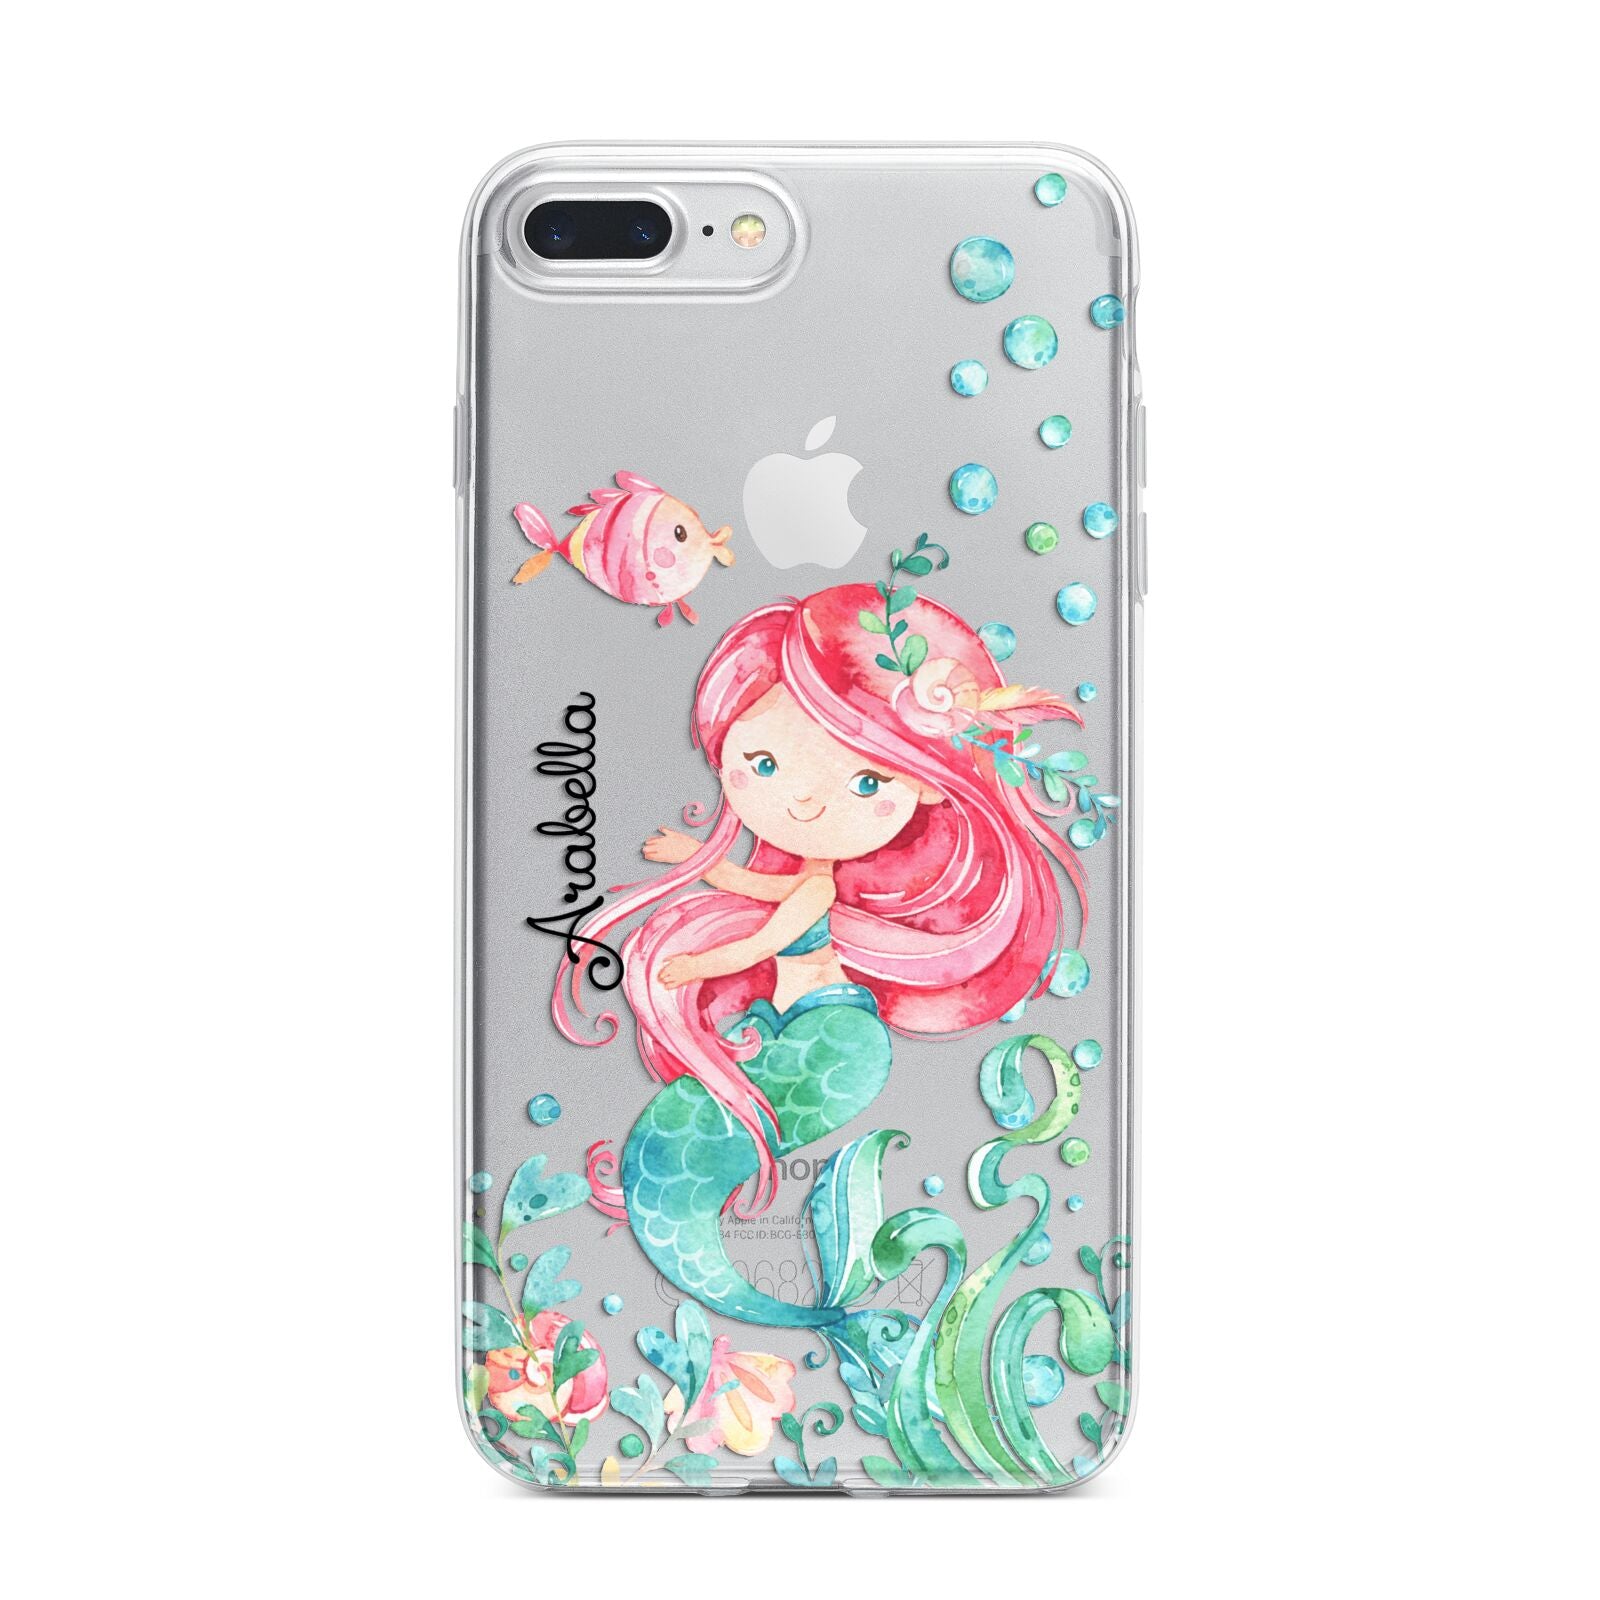 Personalised Mermaid iPhone 7 Plus Bumper Case on Silver iPhone